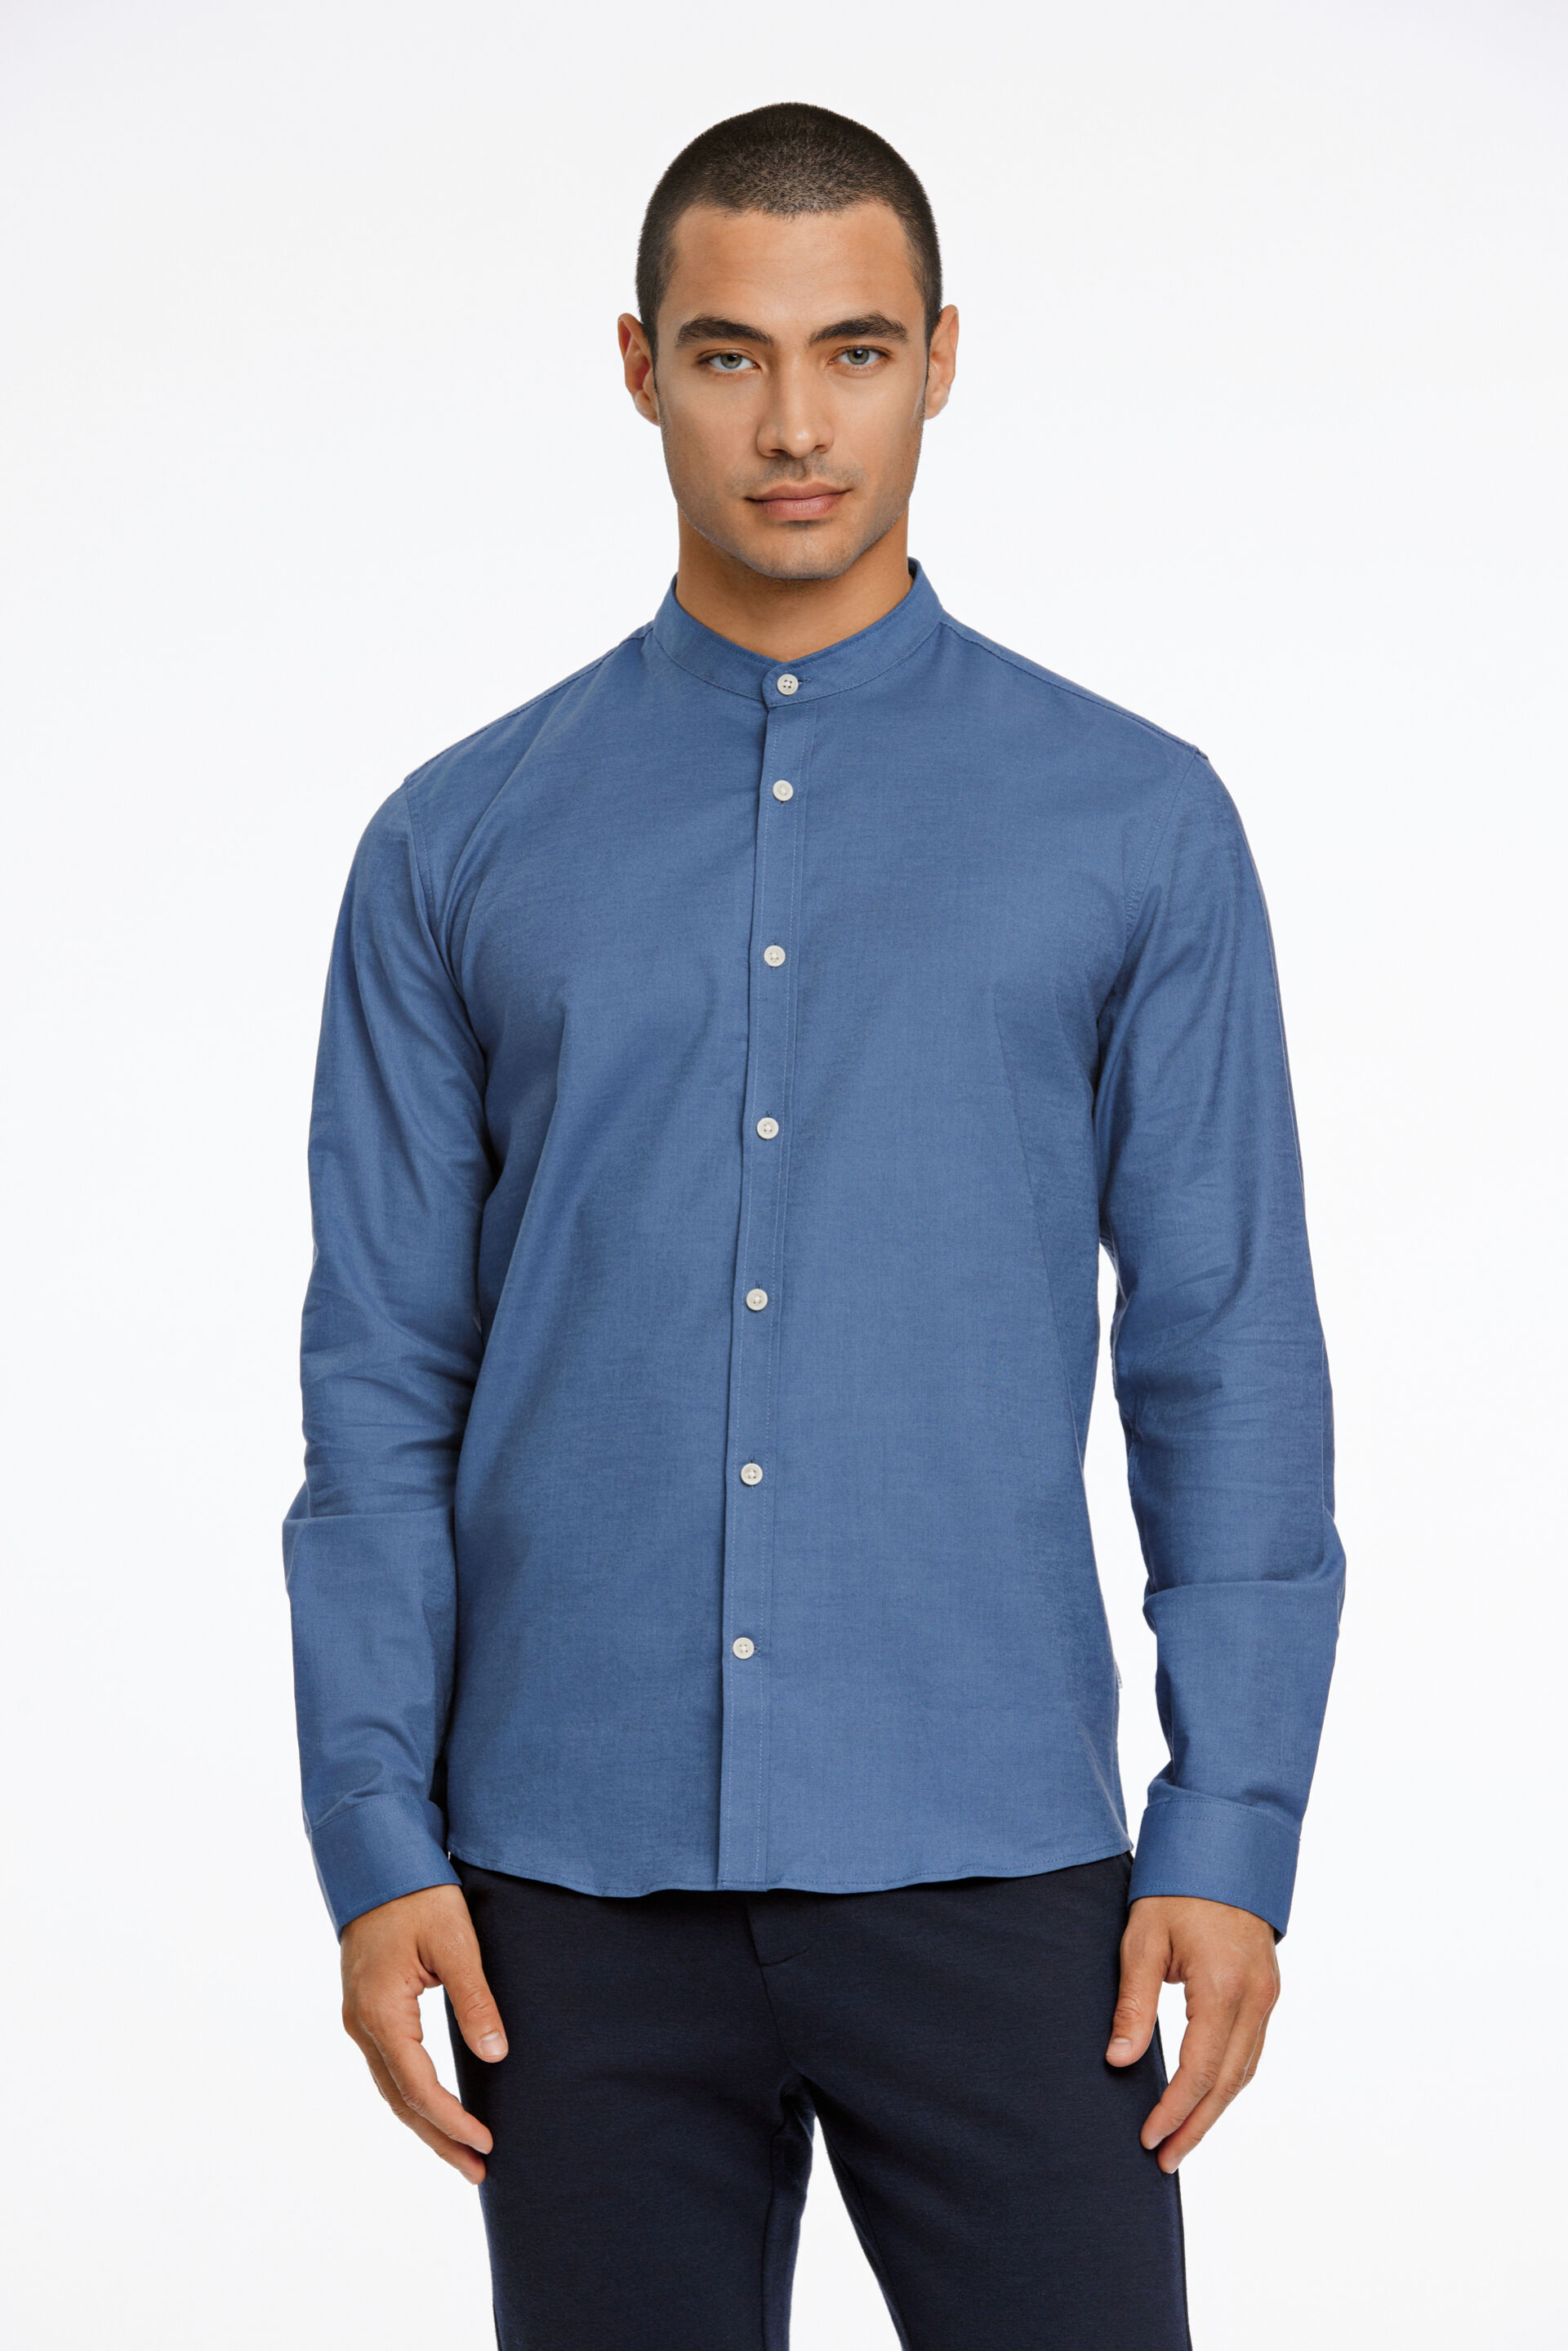 Oxfordskjorta Oxfordskjorta Blå 30-203174A